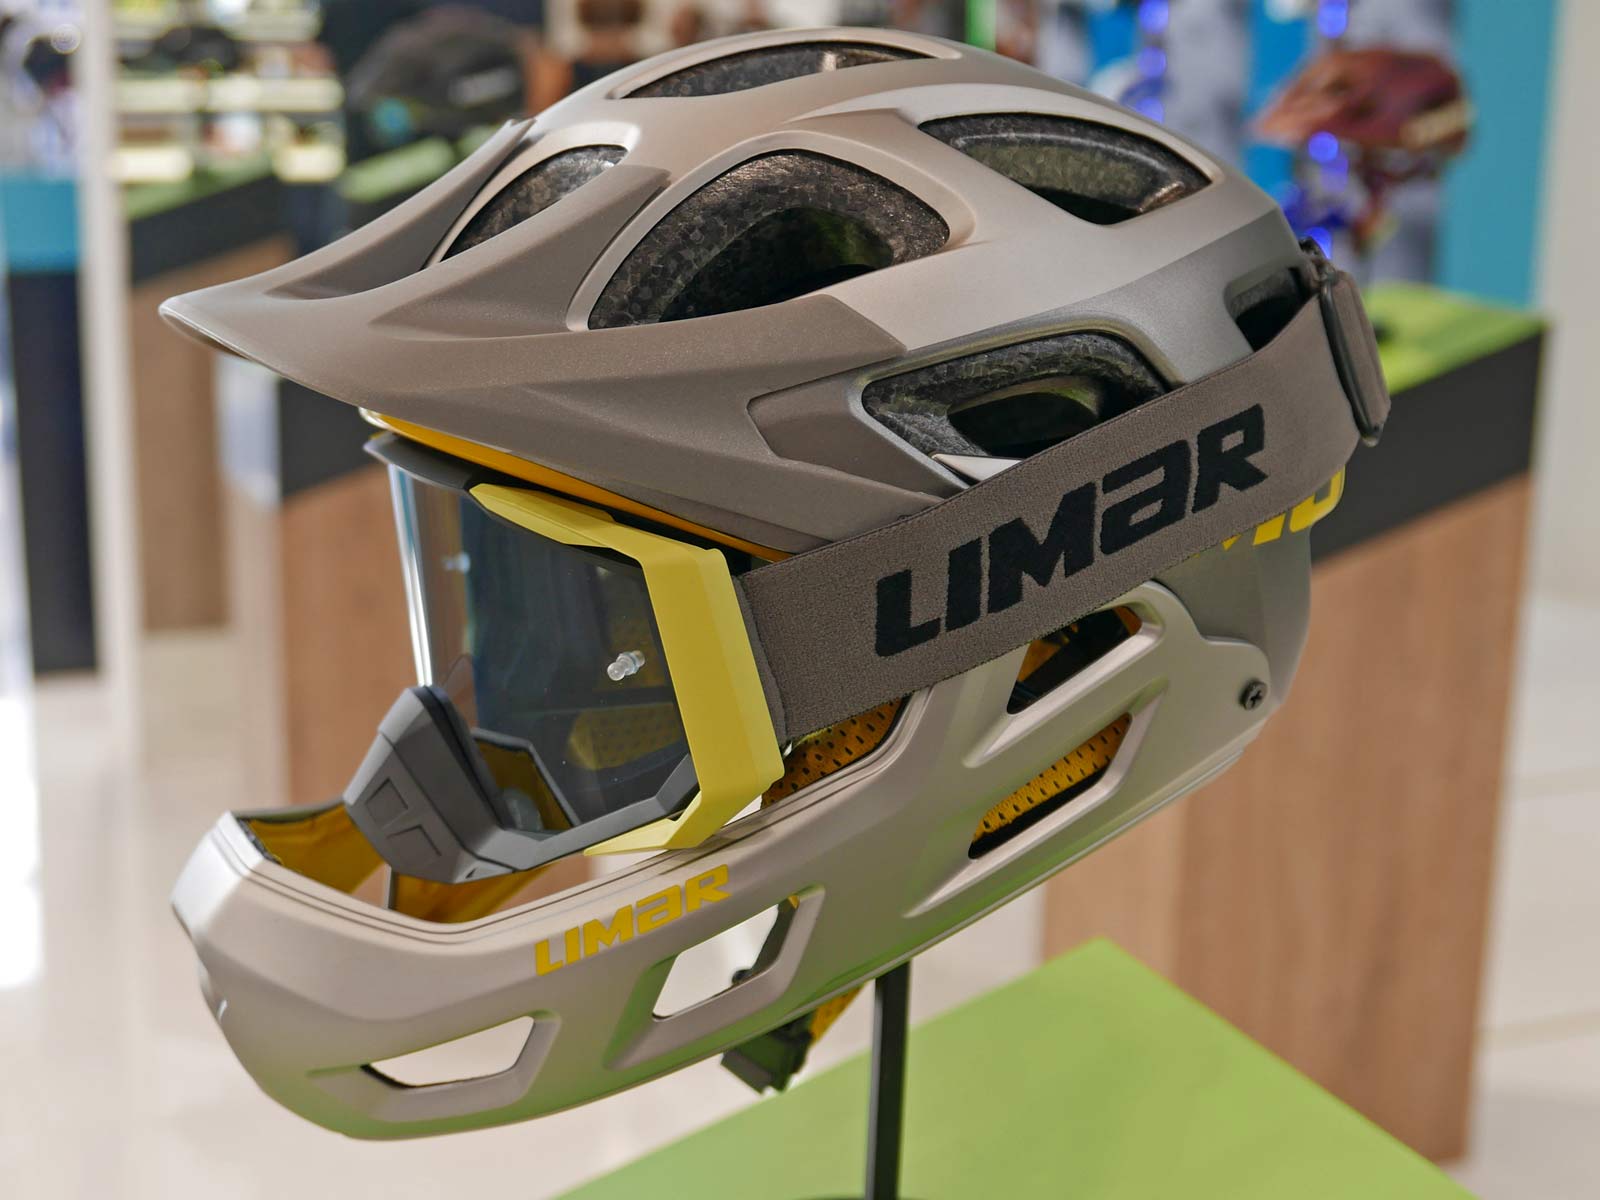 LIMAR Alpe helmet drops super lightweight full face enduro protection at just 540g